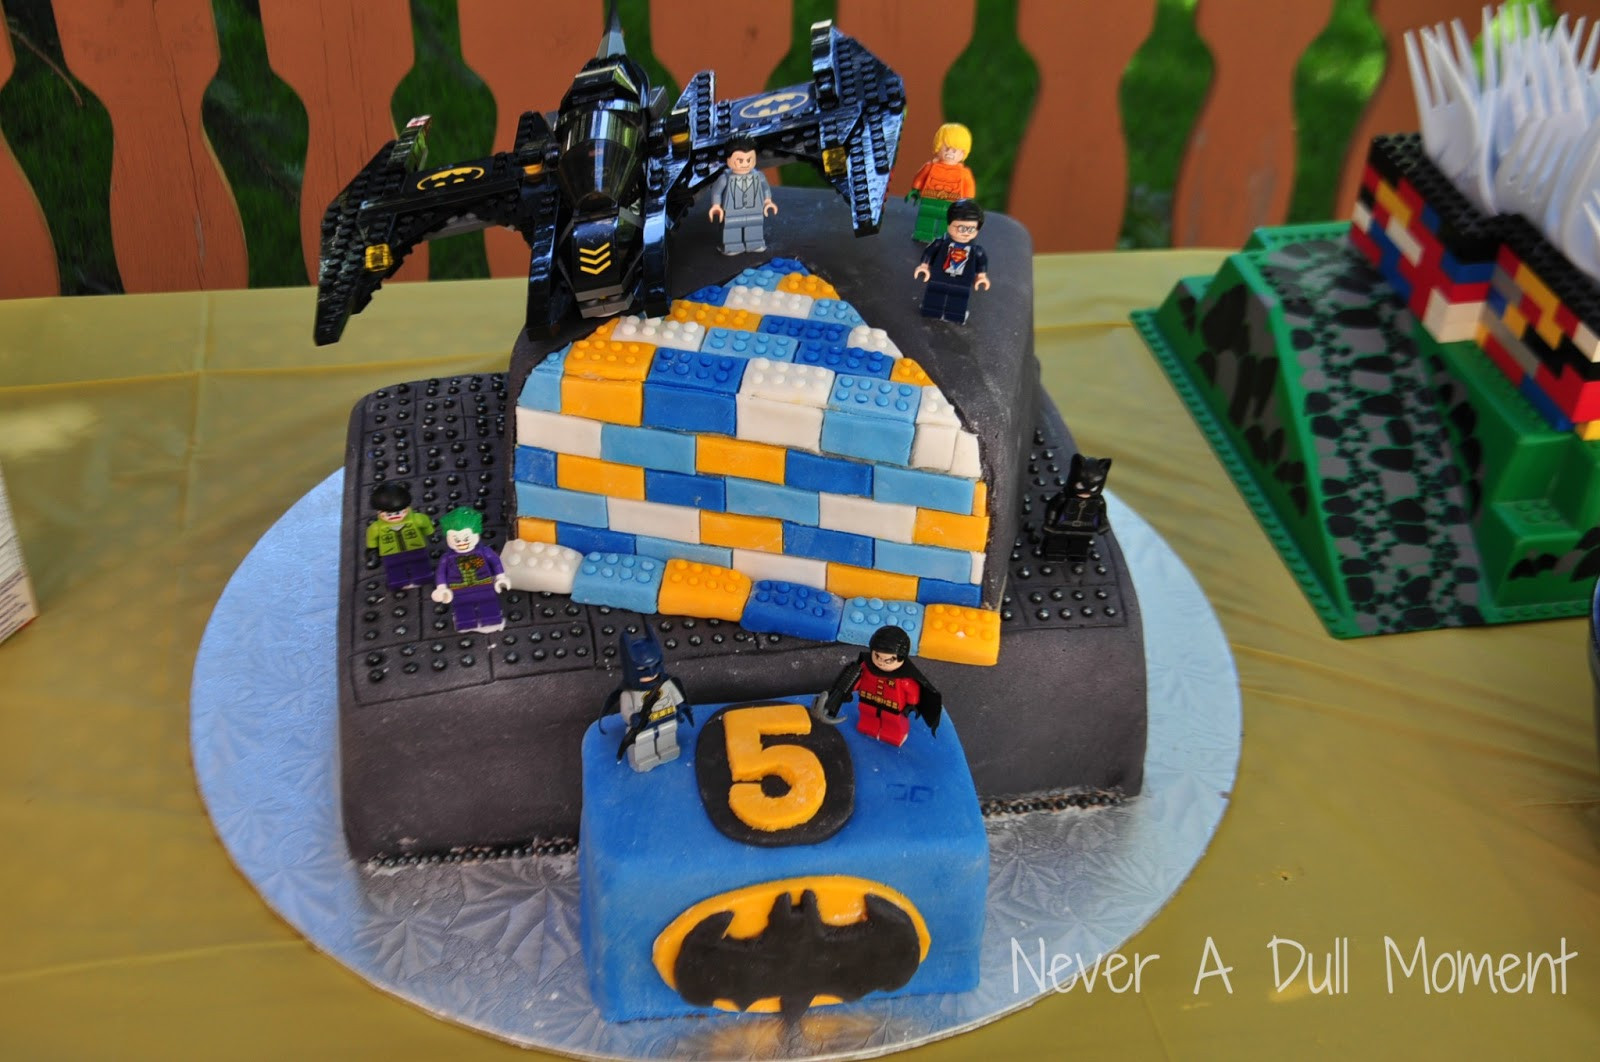 Best ideas about Lego Batman Birthday Cake
. Save or Pin Never A Dull Moment Lego Batman Birthday Cake Now.